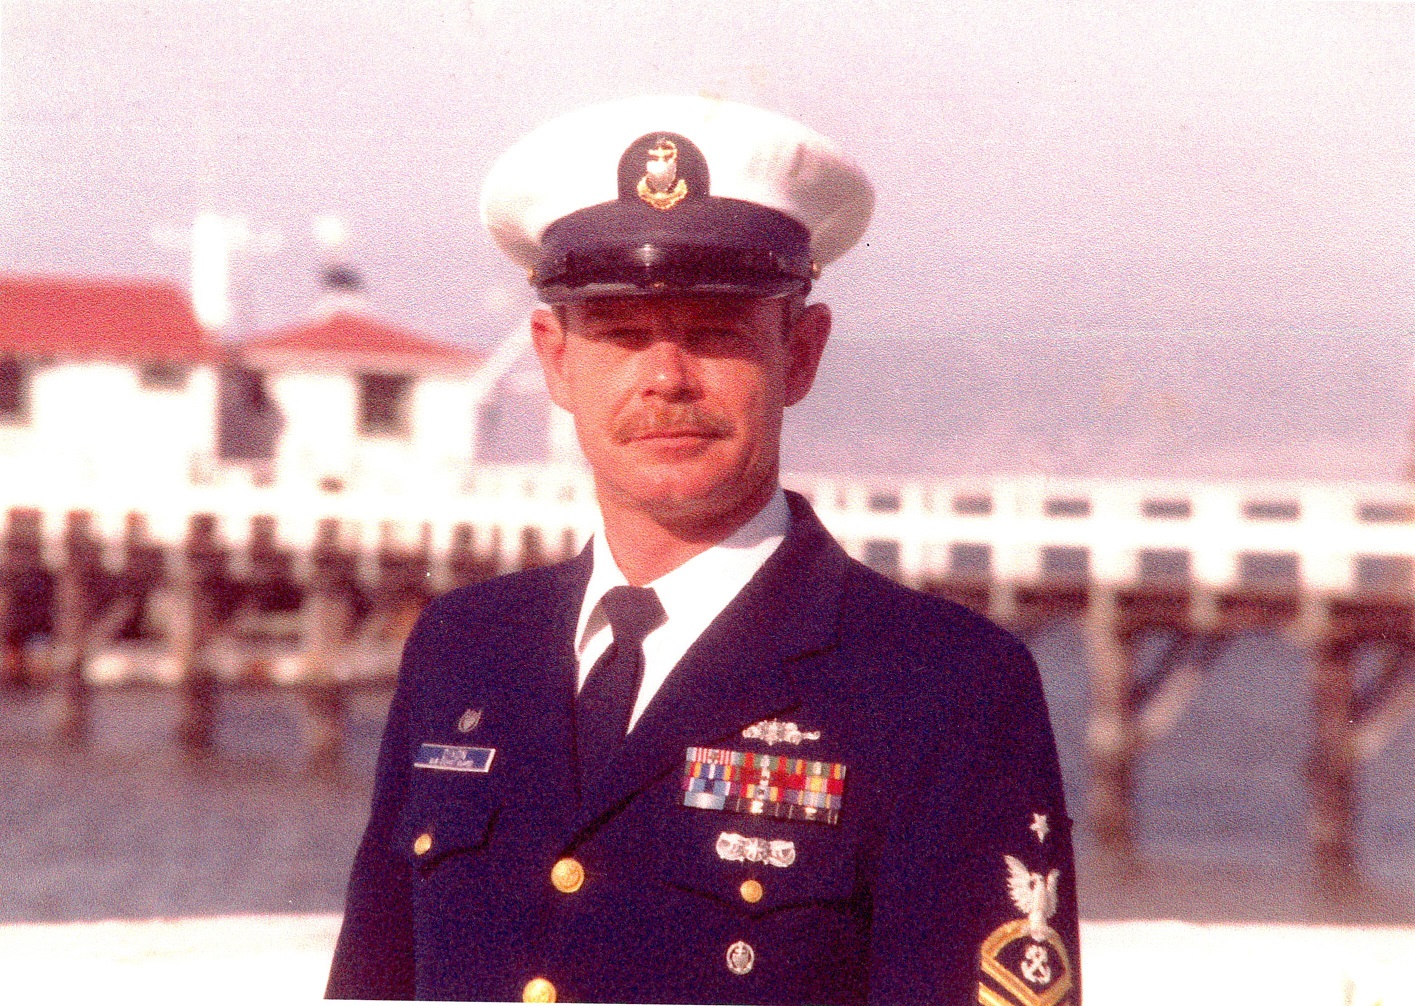 Senior Chief Petty Officer Richard Dixon photographed in his dress blues in Oregon. (U.S. Coast Guard)